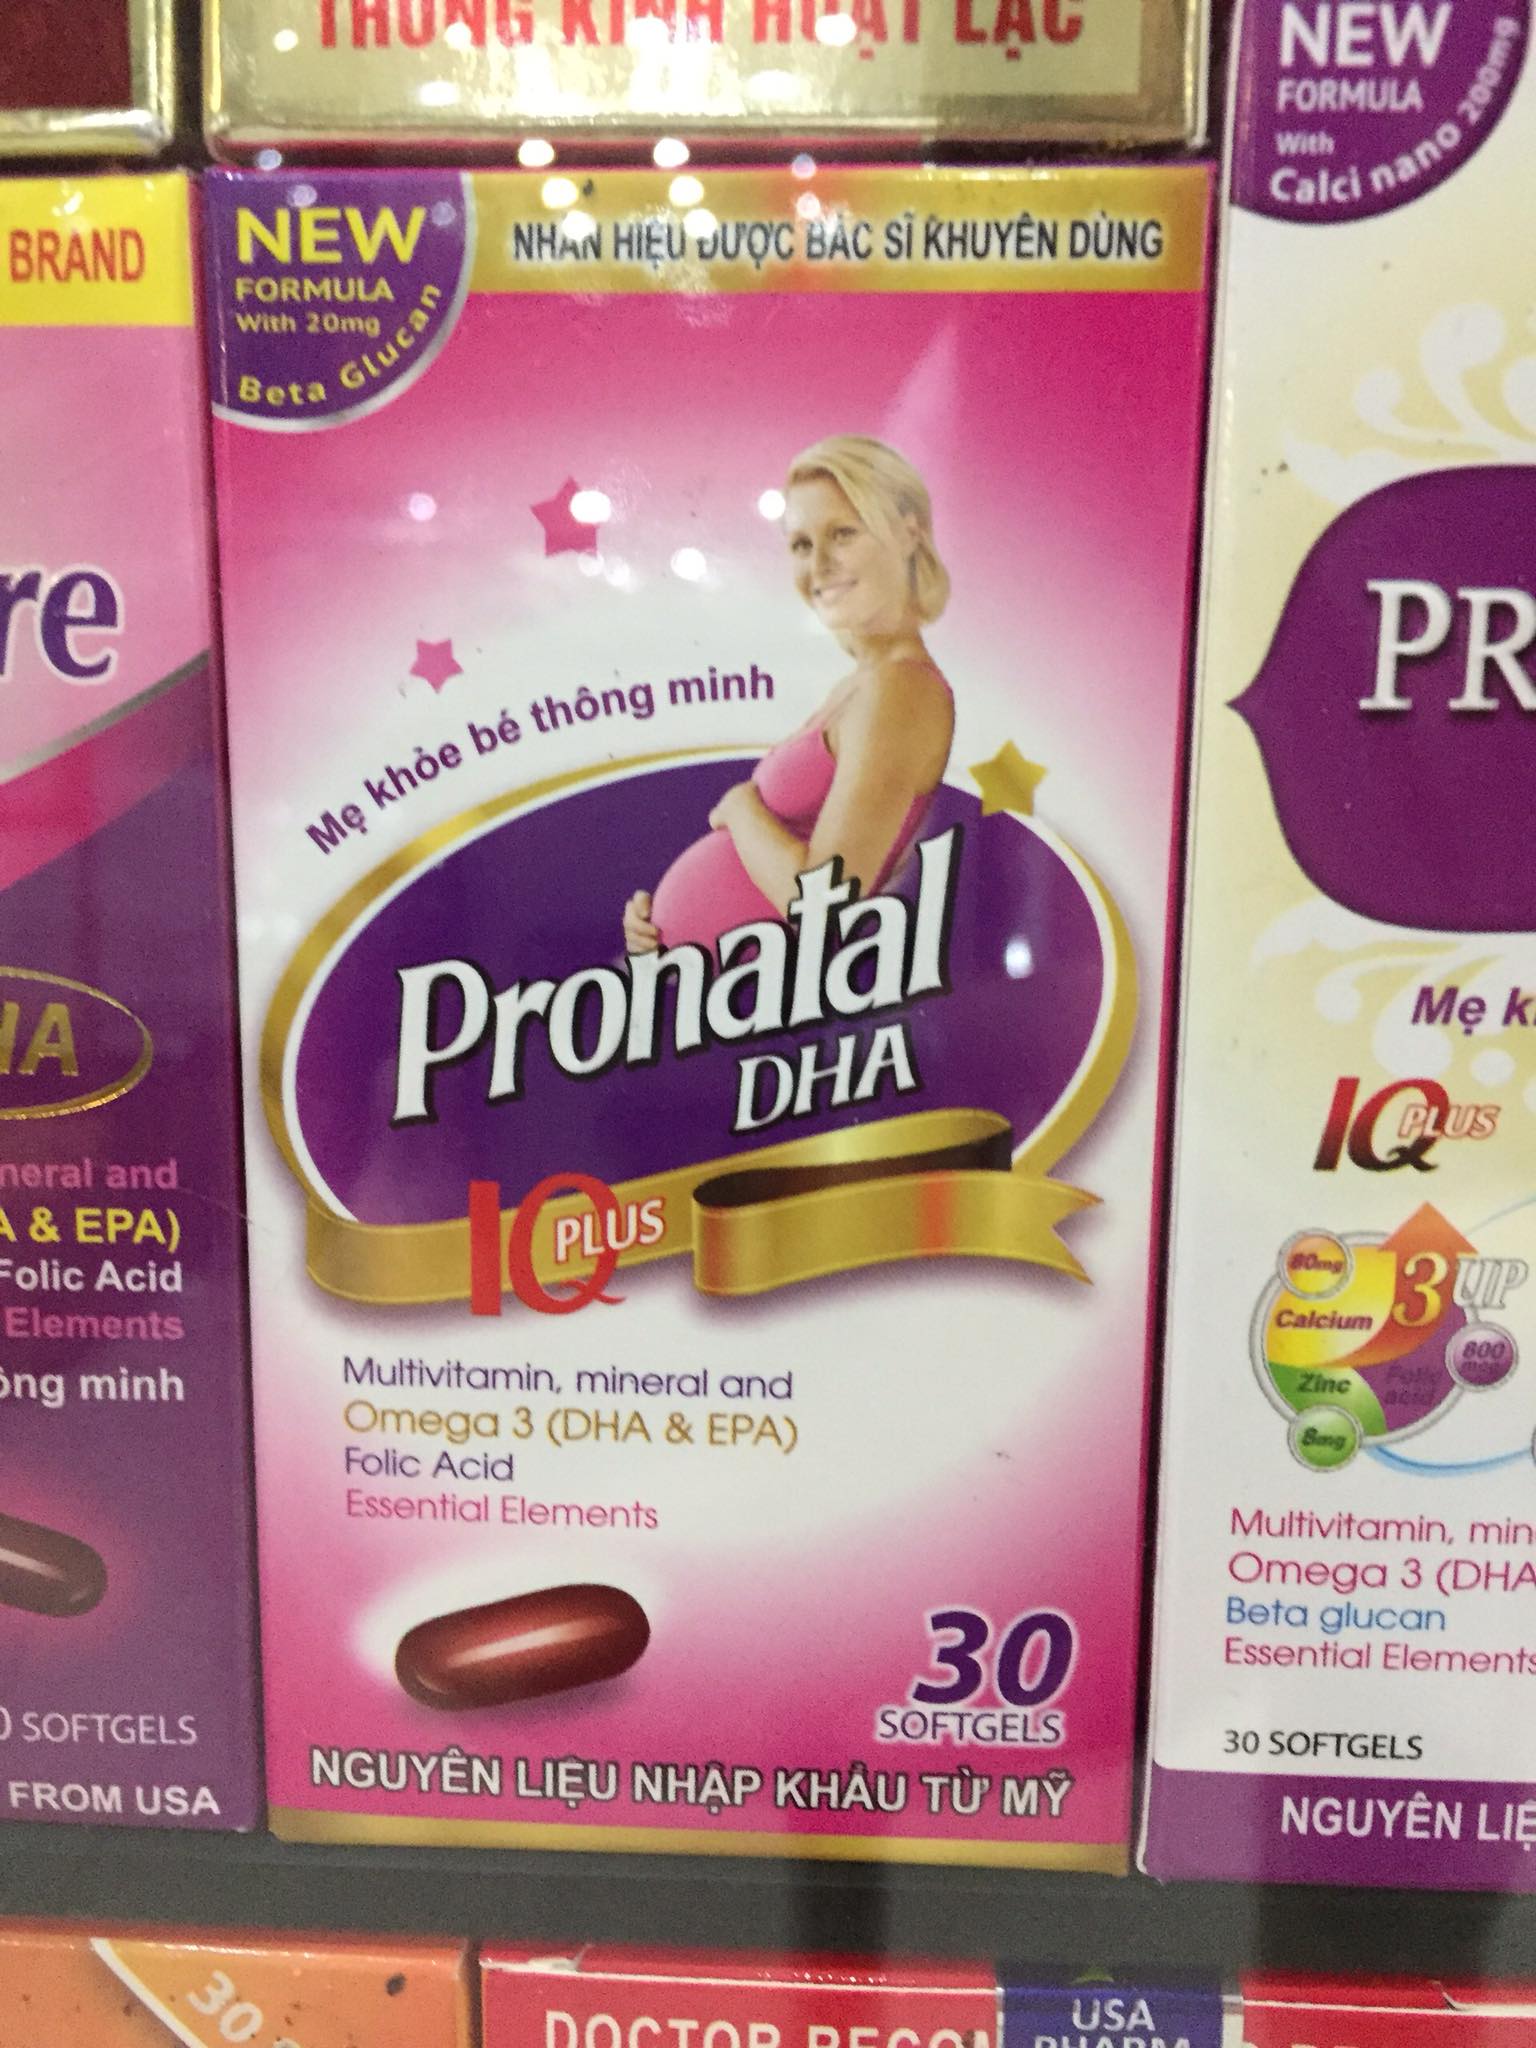 Pronatal DHA